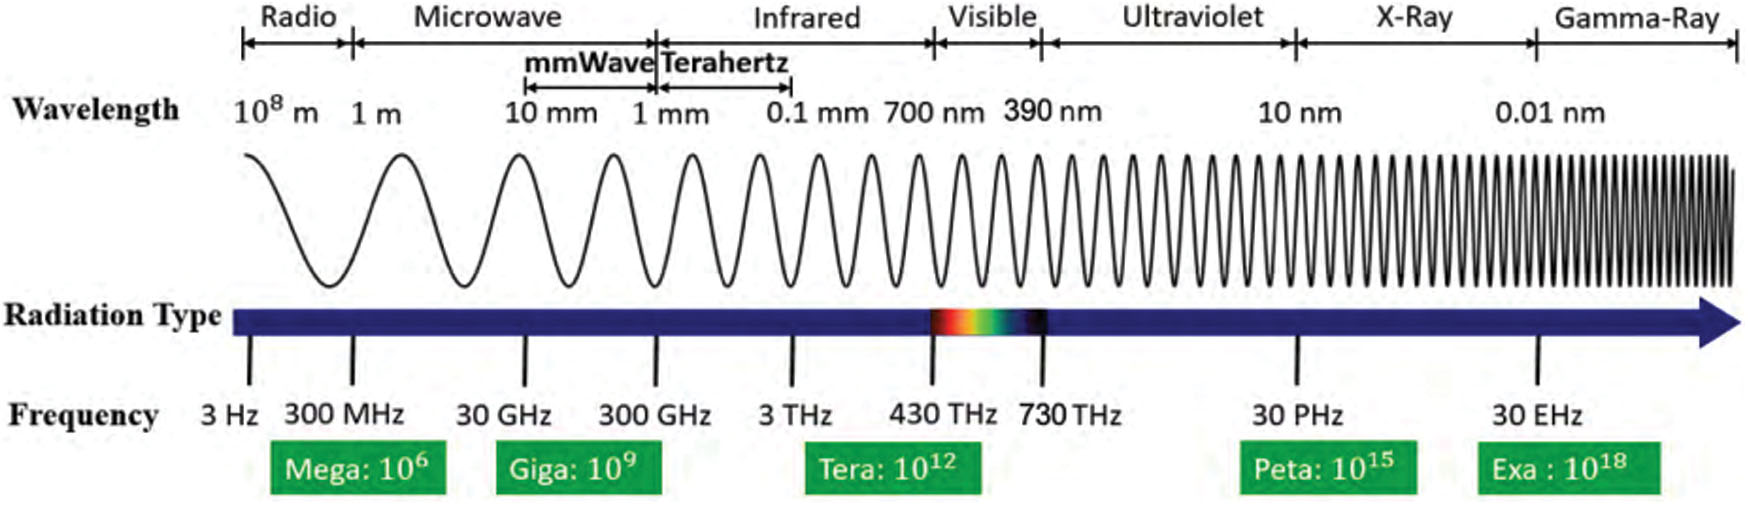 Electromagnetic spectrum and wavelength of terahertz waves